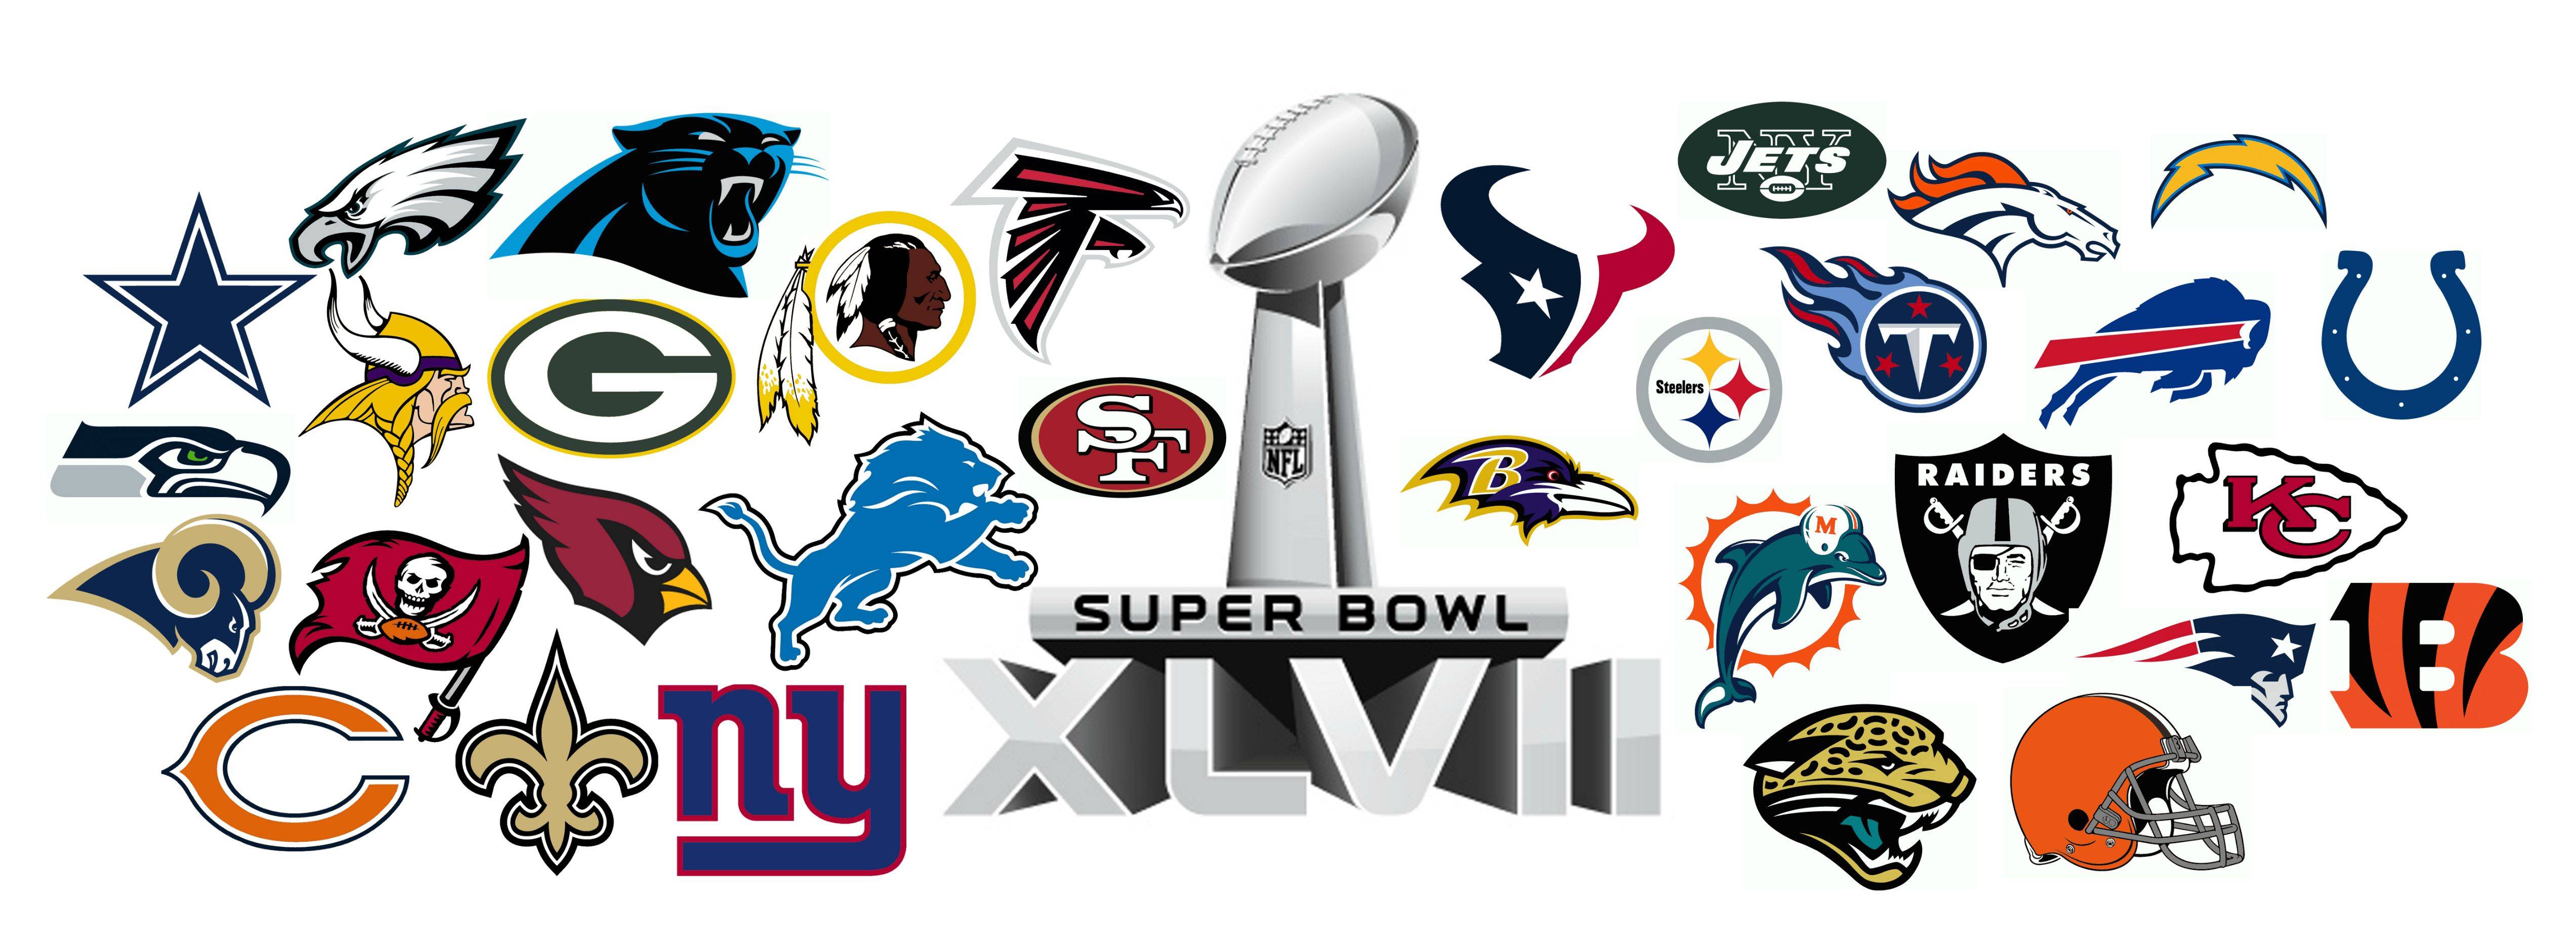 NFL Team Logo - The Philadelphia Eagles logo is the only NFL team logo facing left ...